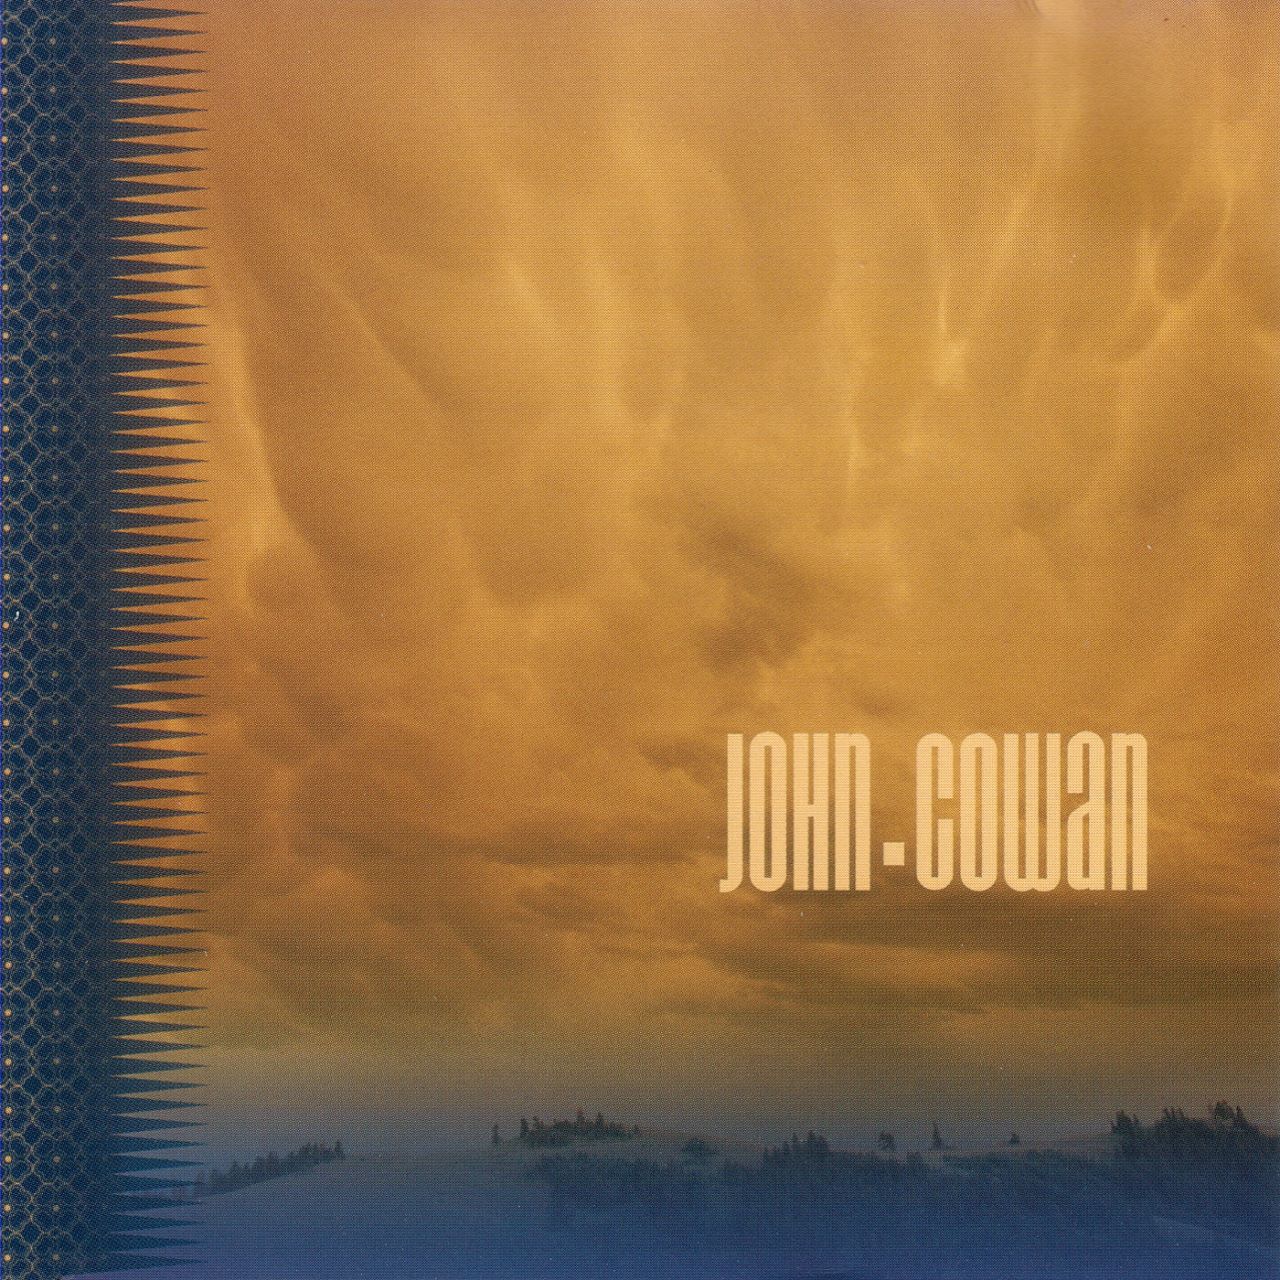 John Cowan - John Cowan cover album